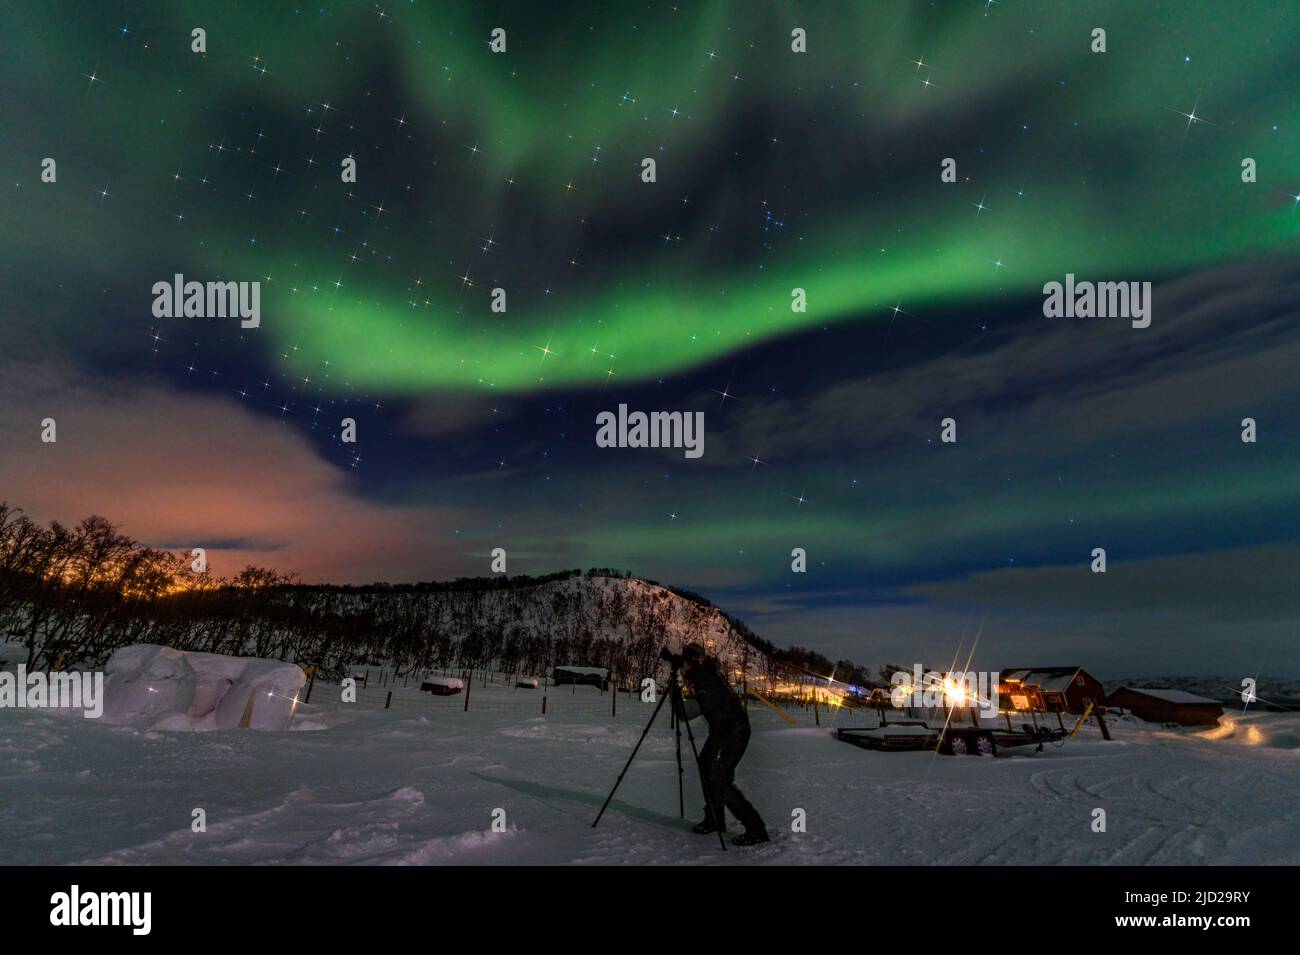 Capturing Aurora borealis in Varanger, Finnmark, Norway in March. Stock Photo